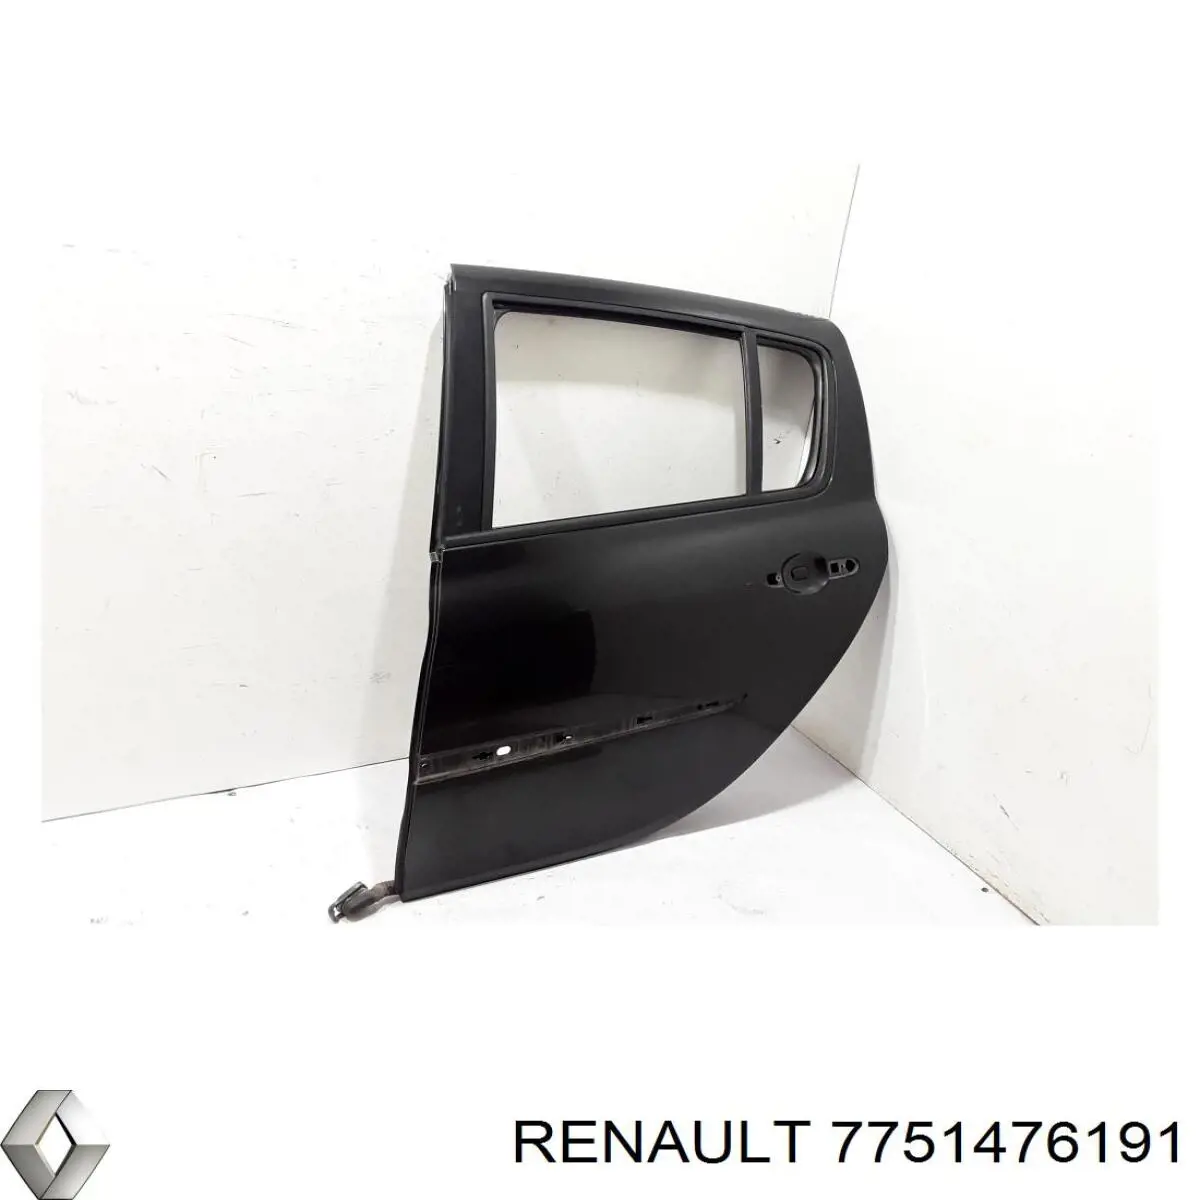 7751476191 Renault (RVI) puerta trasera izquierda